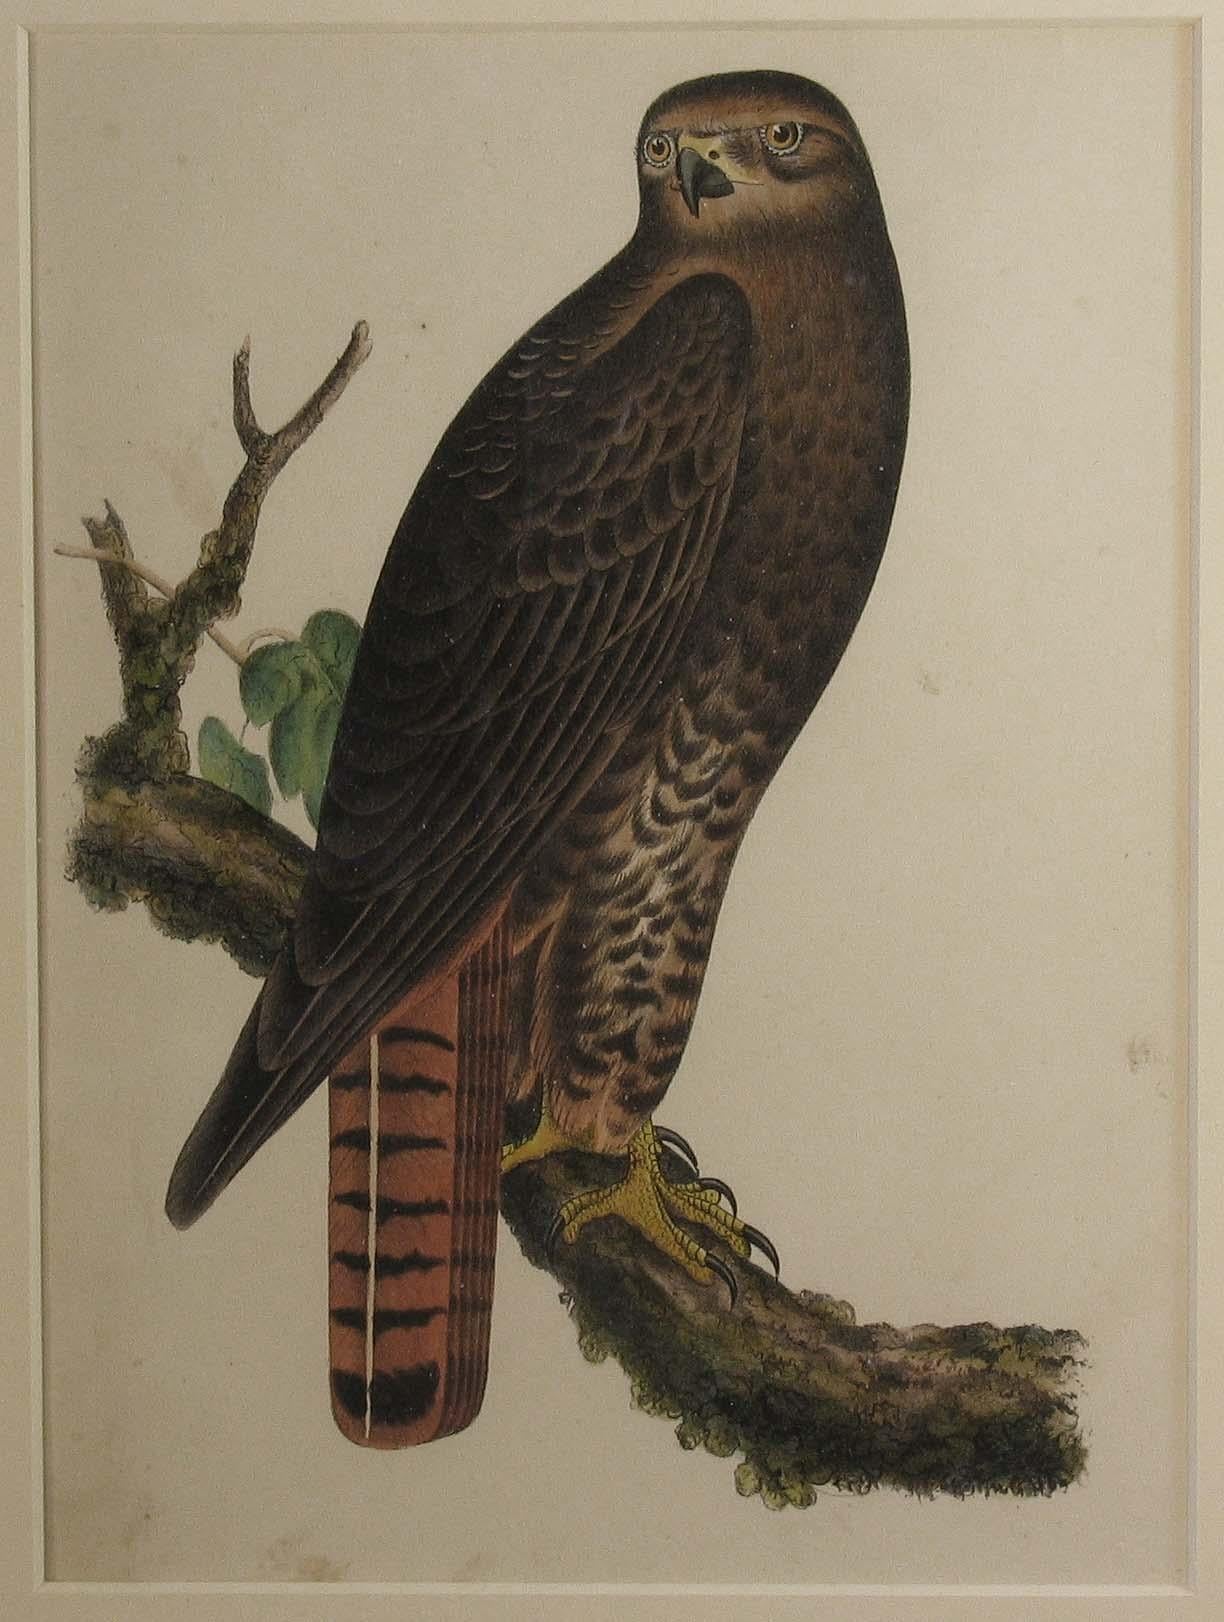 Paper Four Hand Colored Lithographs of Birds of Prey, circa 1859